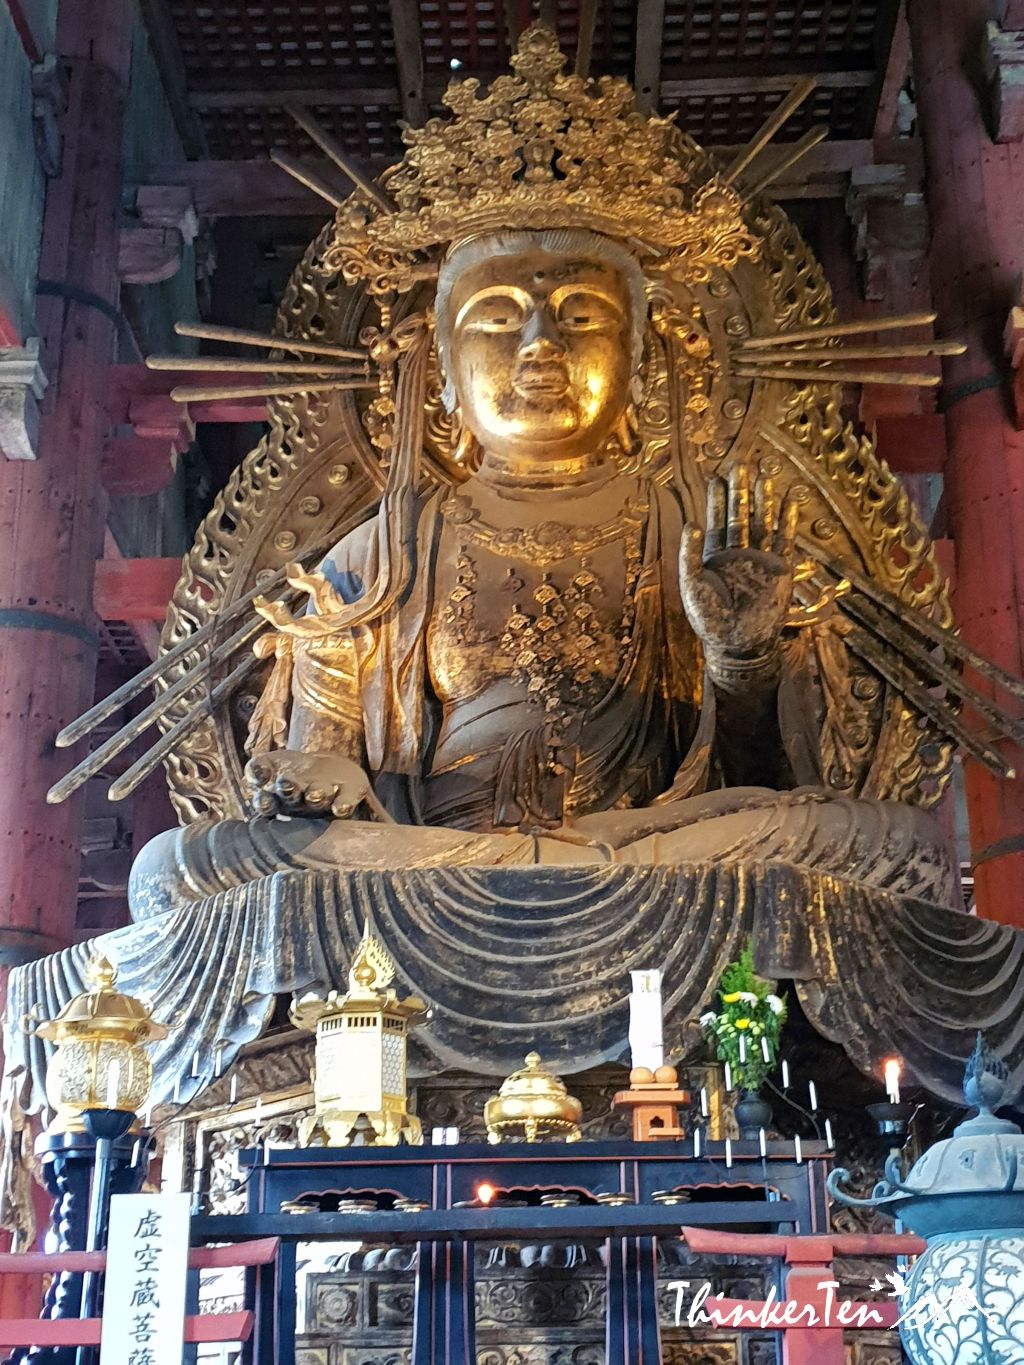 Nara Todaiji Temple - 12 things you like to learn before you go